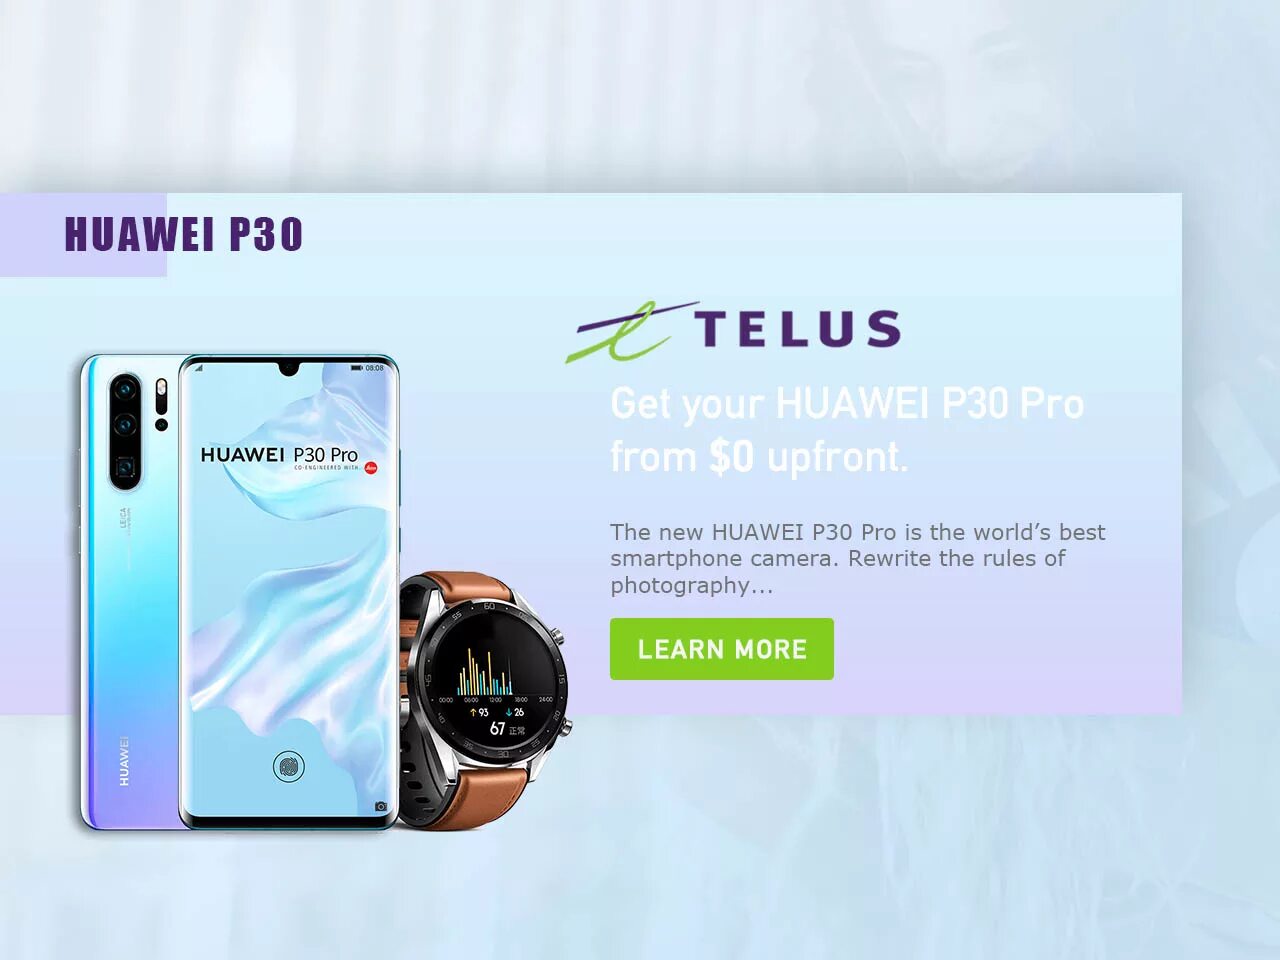 Нова 30 про. Huawei p30 характеристики. Телус Интернешънъл русские аналоги. Работа Telus appen отзывы.